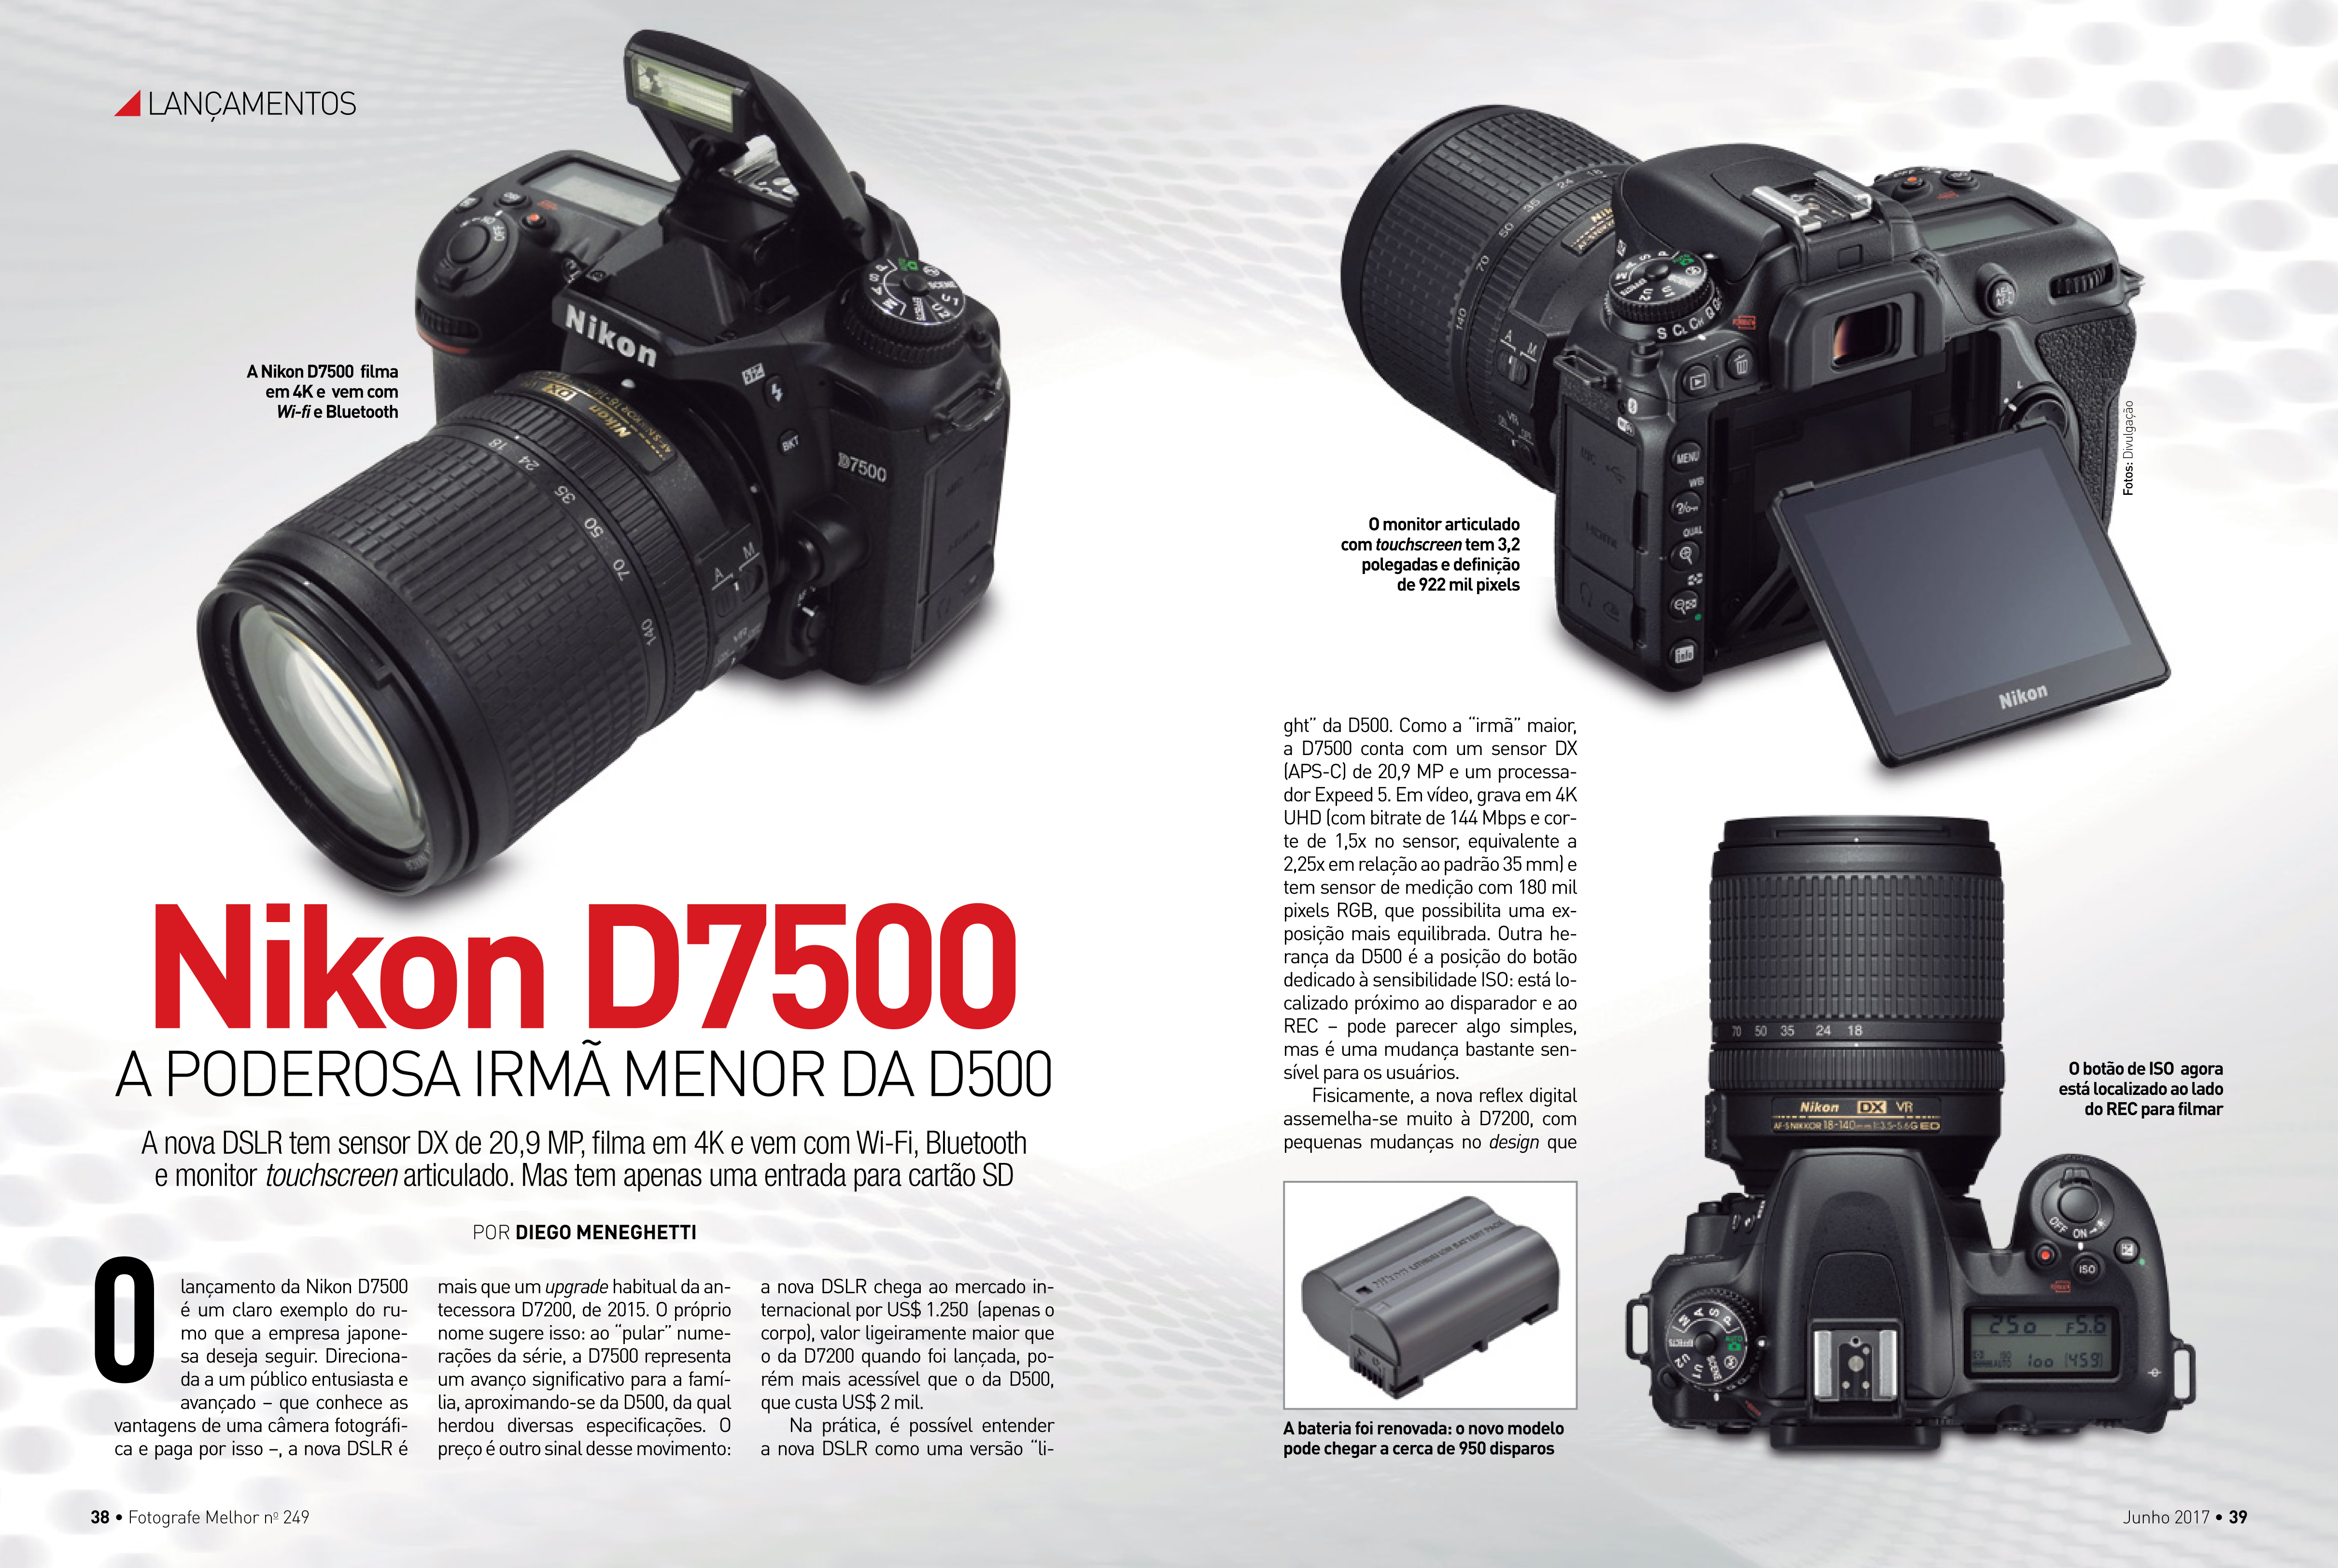 38-39_Lançamento Nikon D7500_Sony a9_Fuji SQ10_Fotografe 249